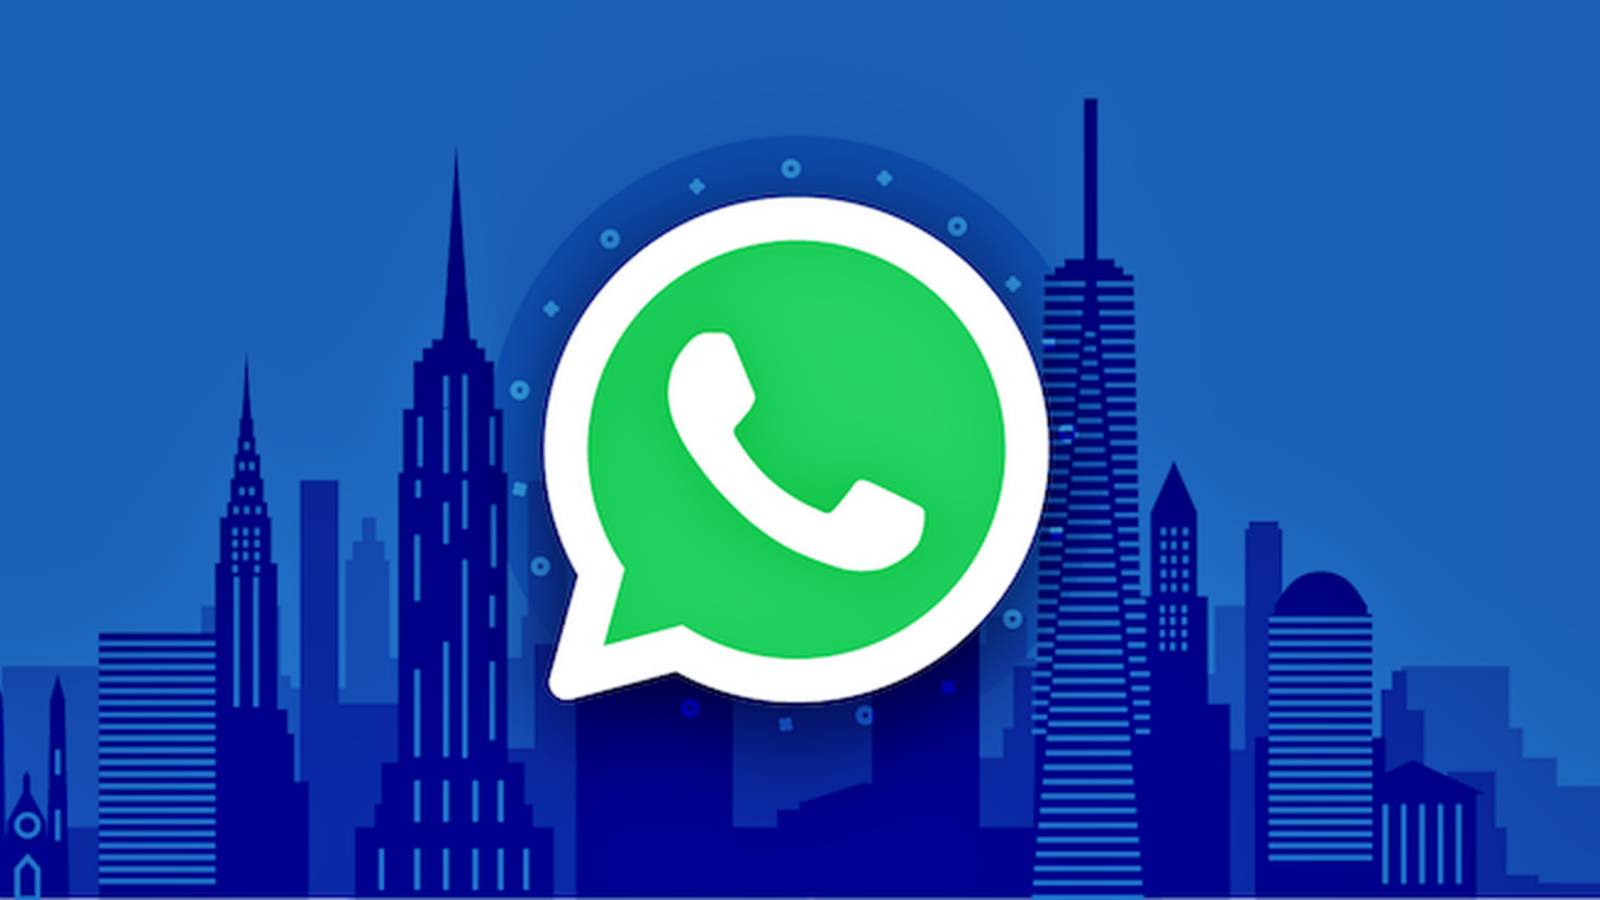 WhatsApp svarar